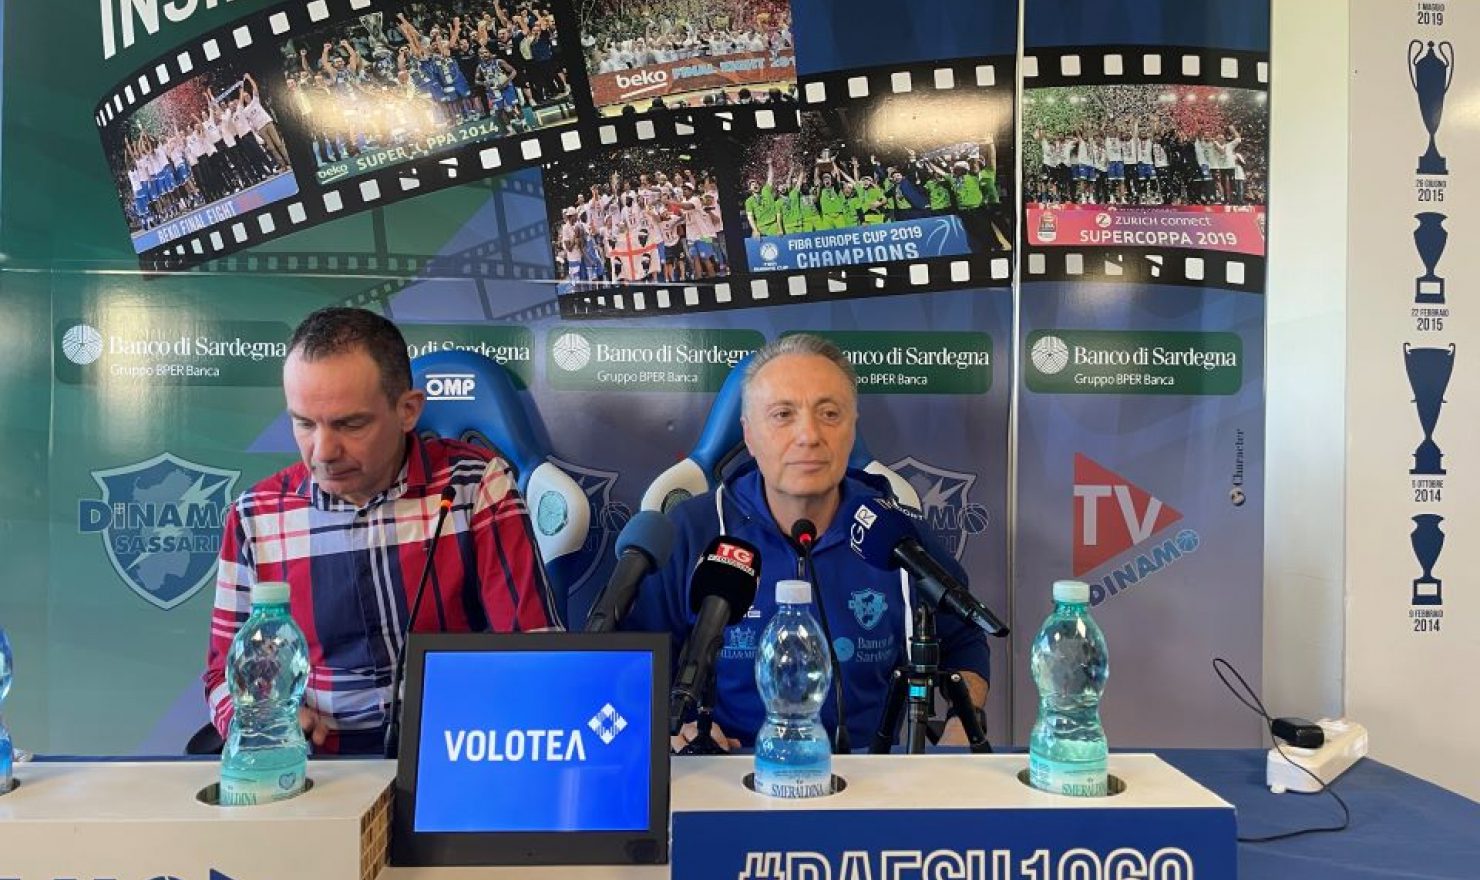 Conferenza stampa Dinamo Varese